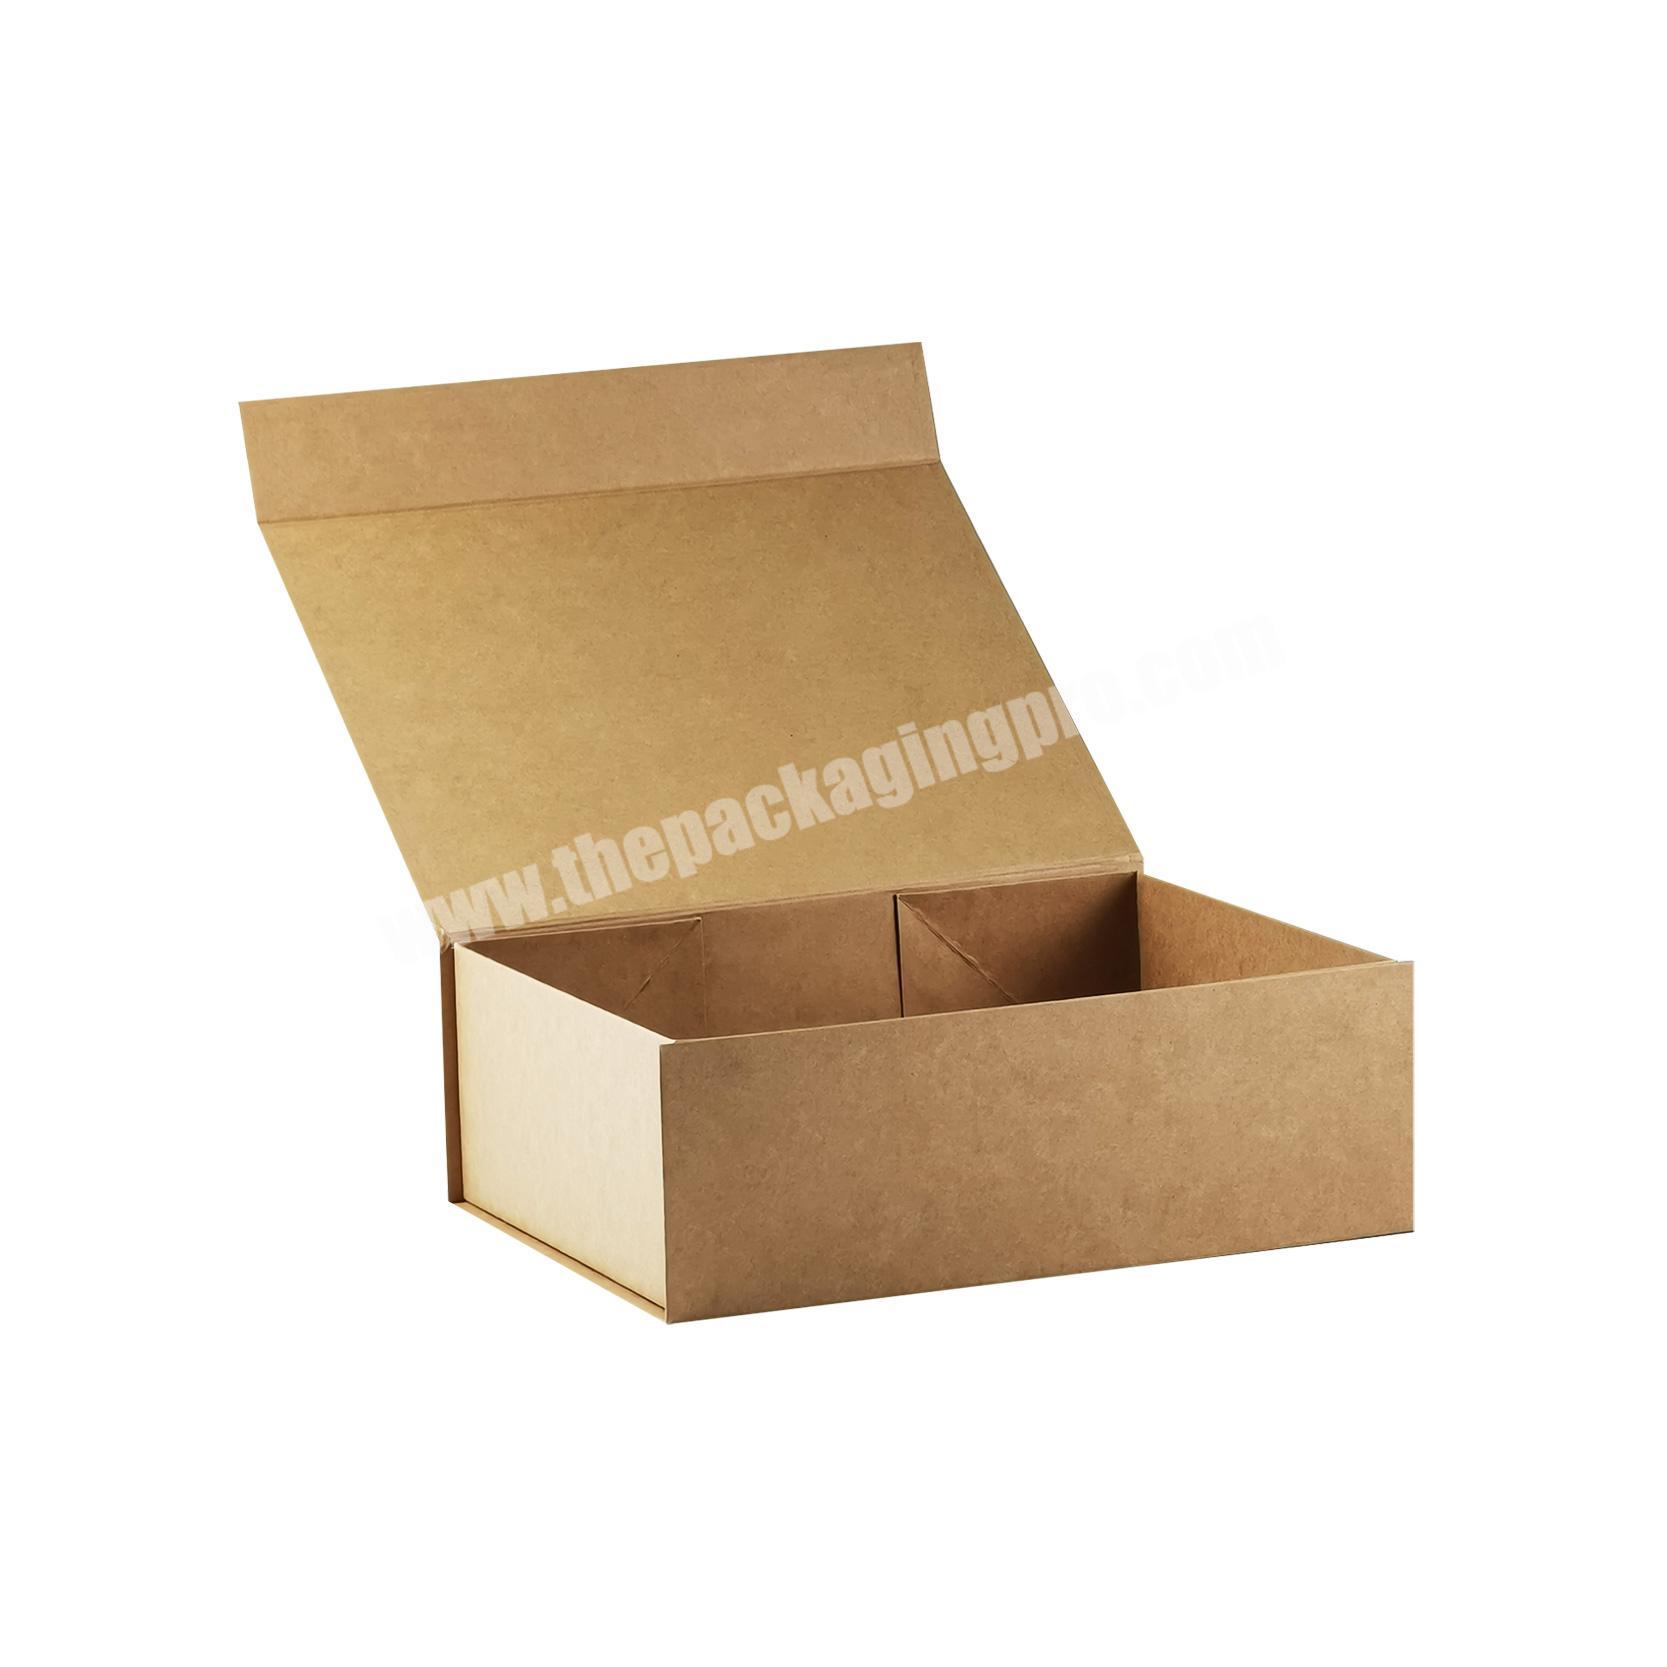 Bespoke natural kraft brown paper packaging gift hamper boxes with magnetic lid